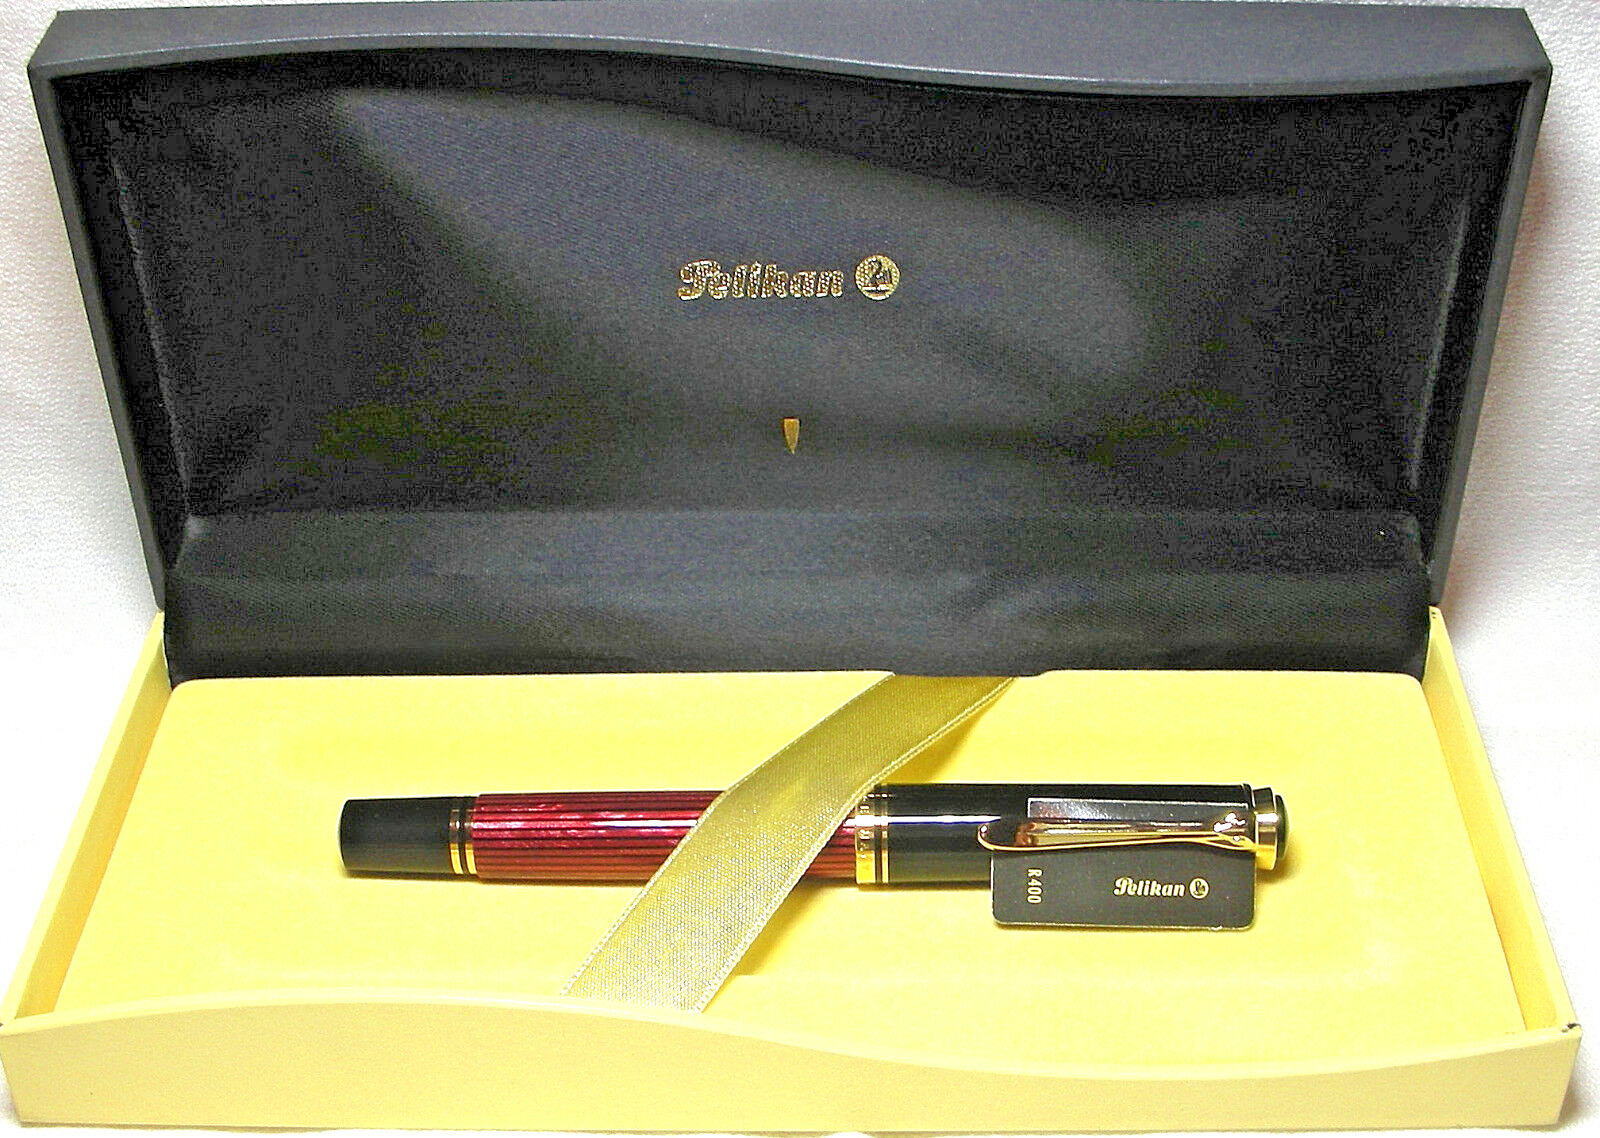 Pelikan Souveran R400 Roller Ball Pen Red & Black New In Box Beautiful Pen